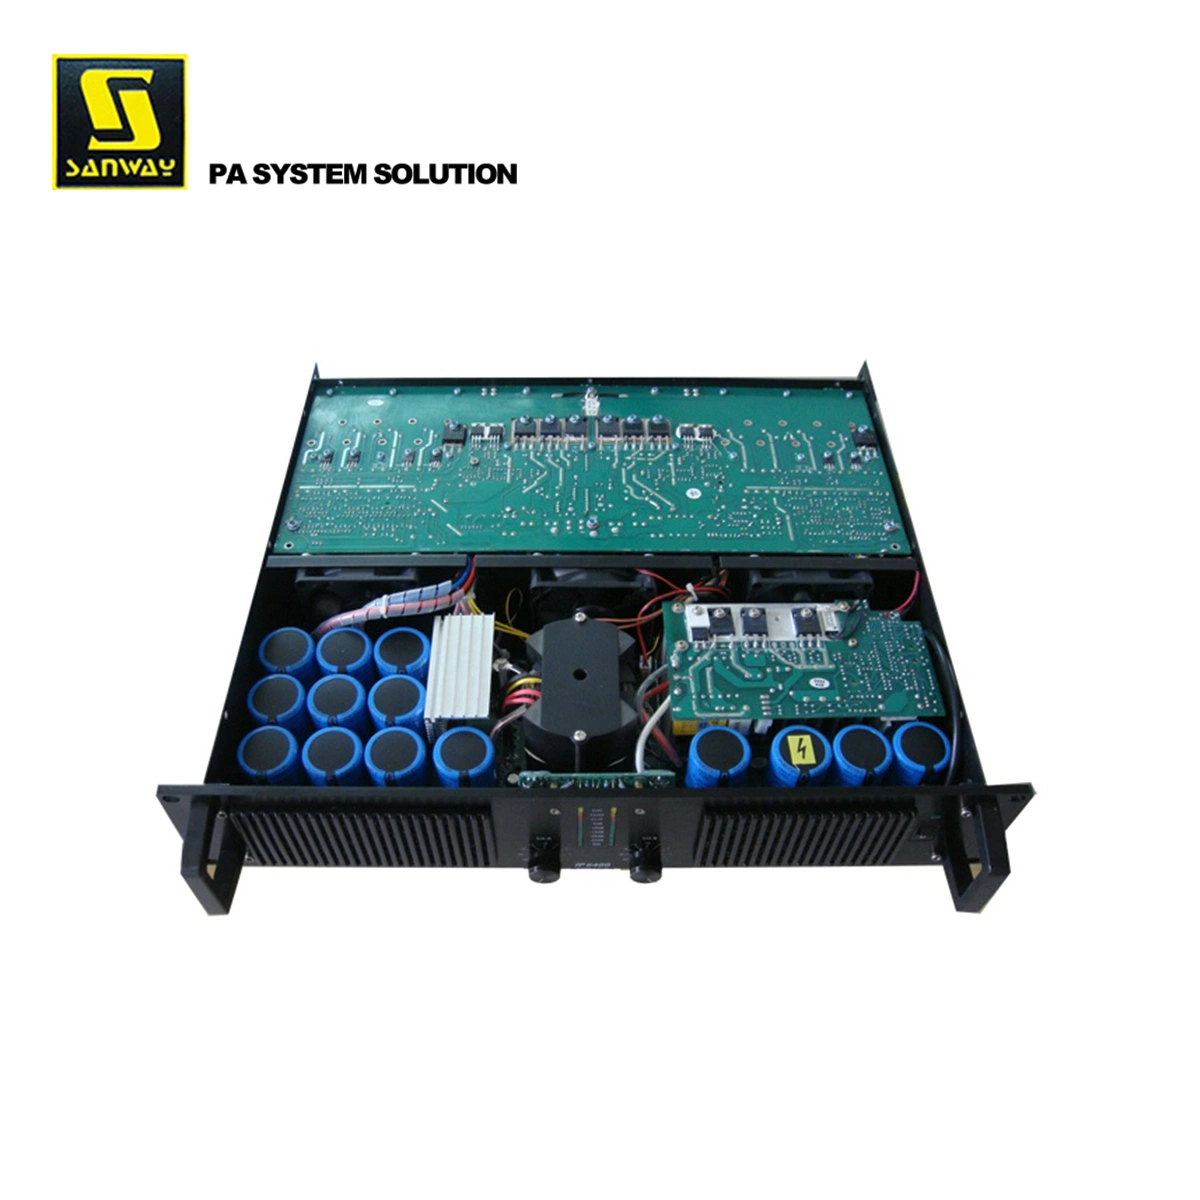 Fp6400 Mosfet Power Amplifiers, PA Subwoofers Power Amplifier